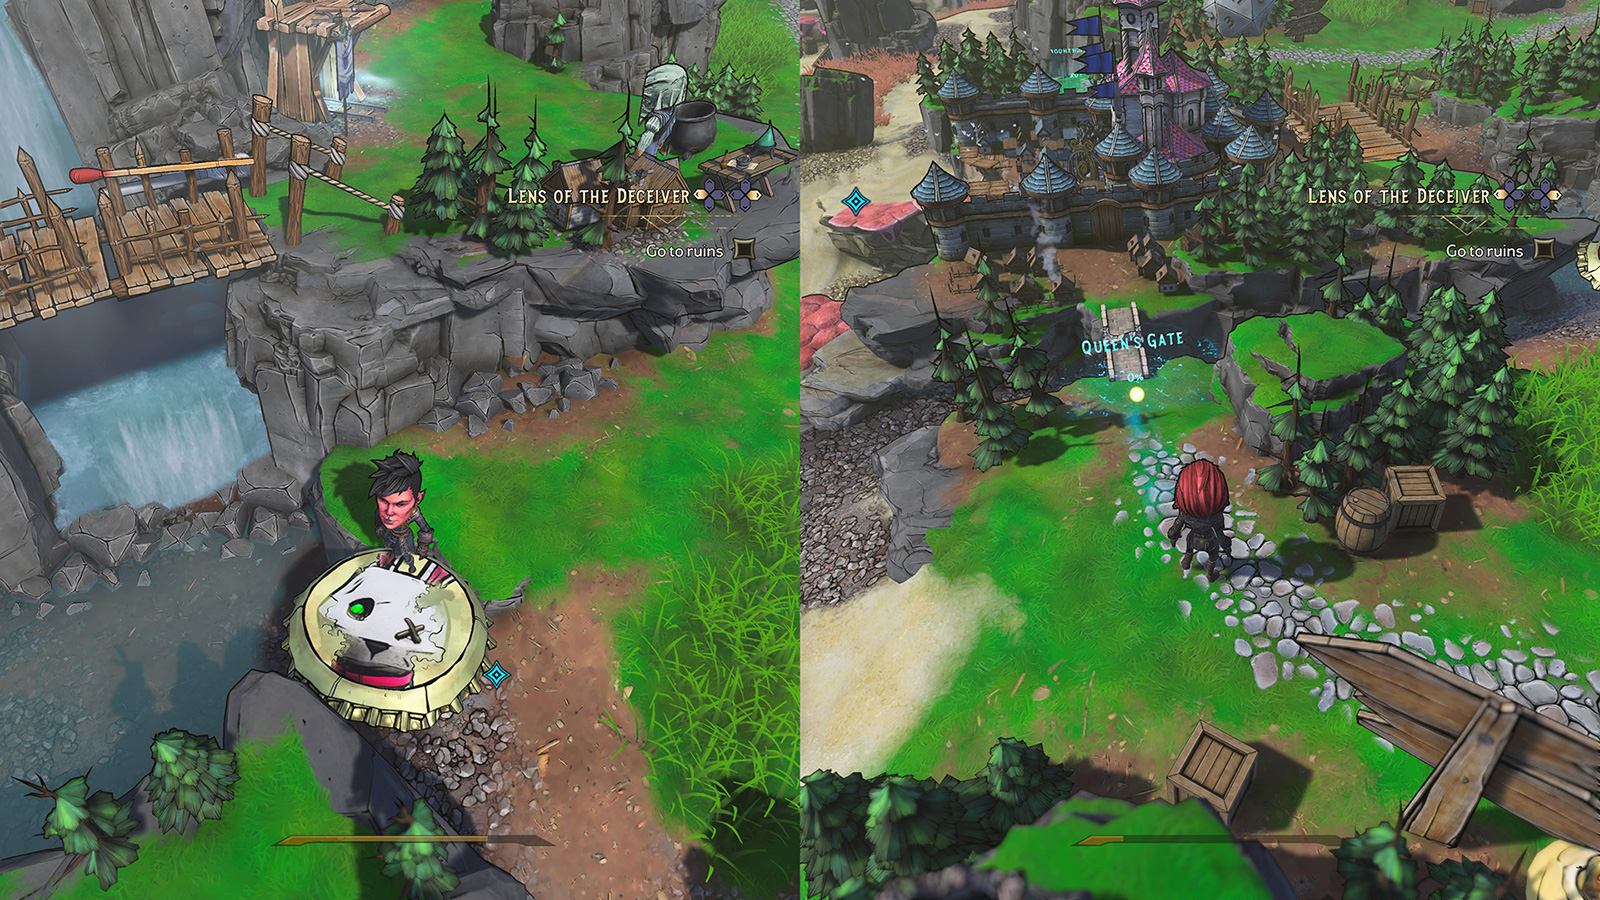 Split screen screenshot of Tiny Tina's Wonderlands overworld